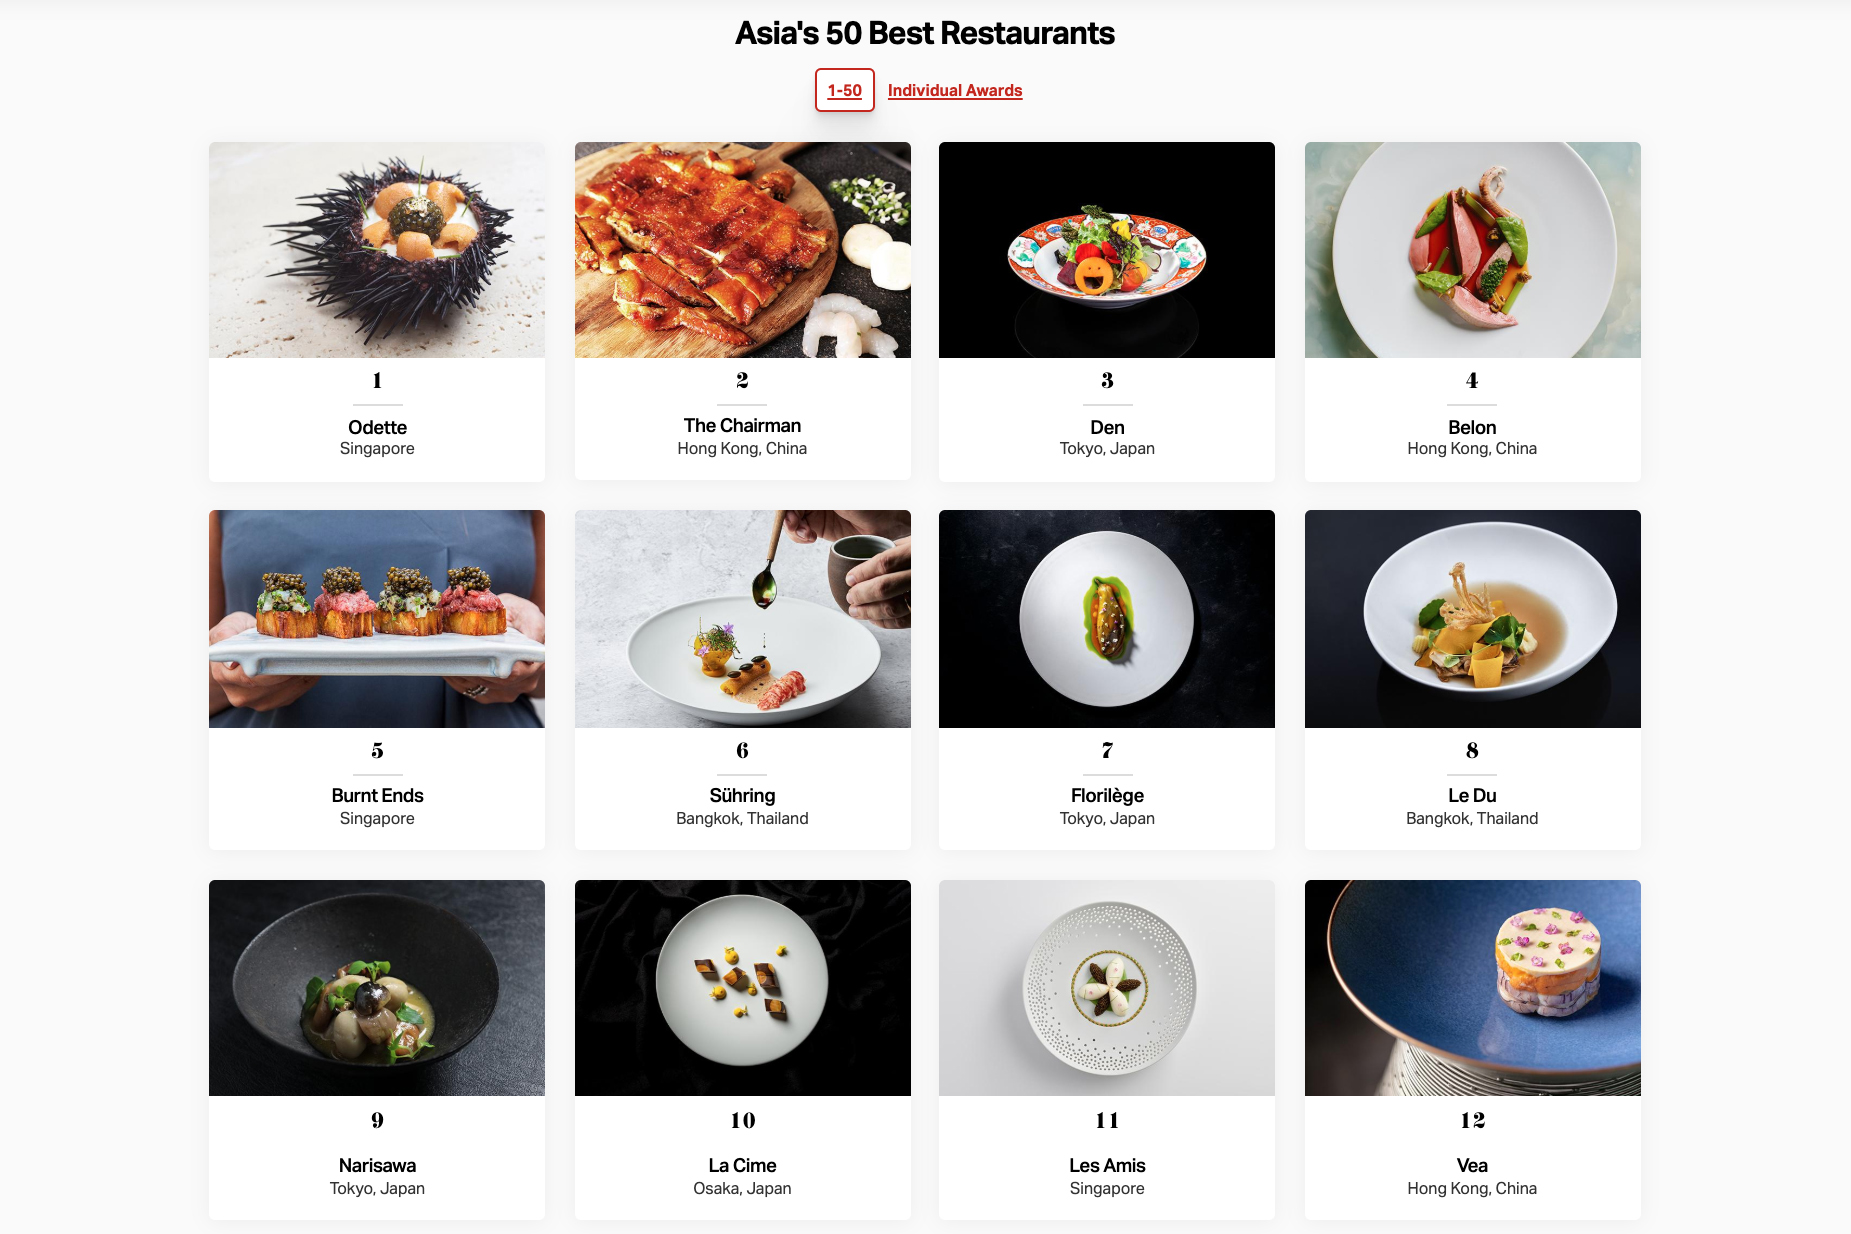 Asia’s 50 Best Restaurants 2020 list